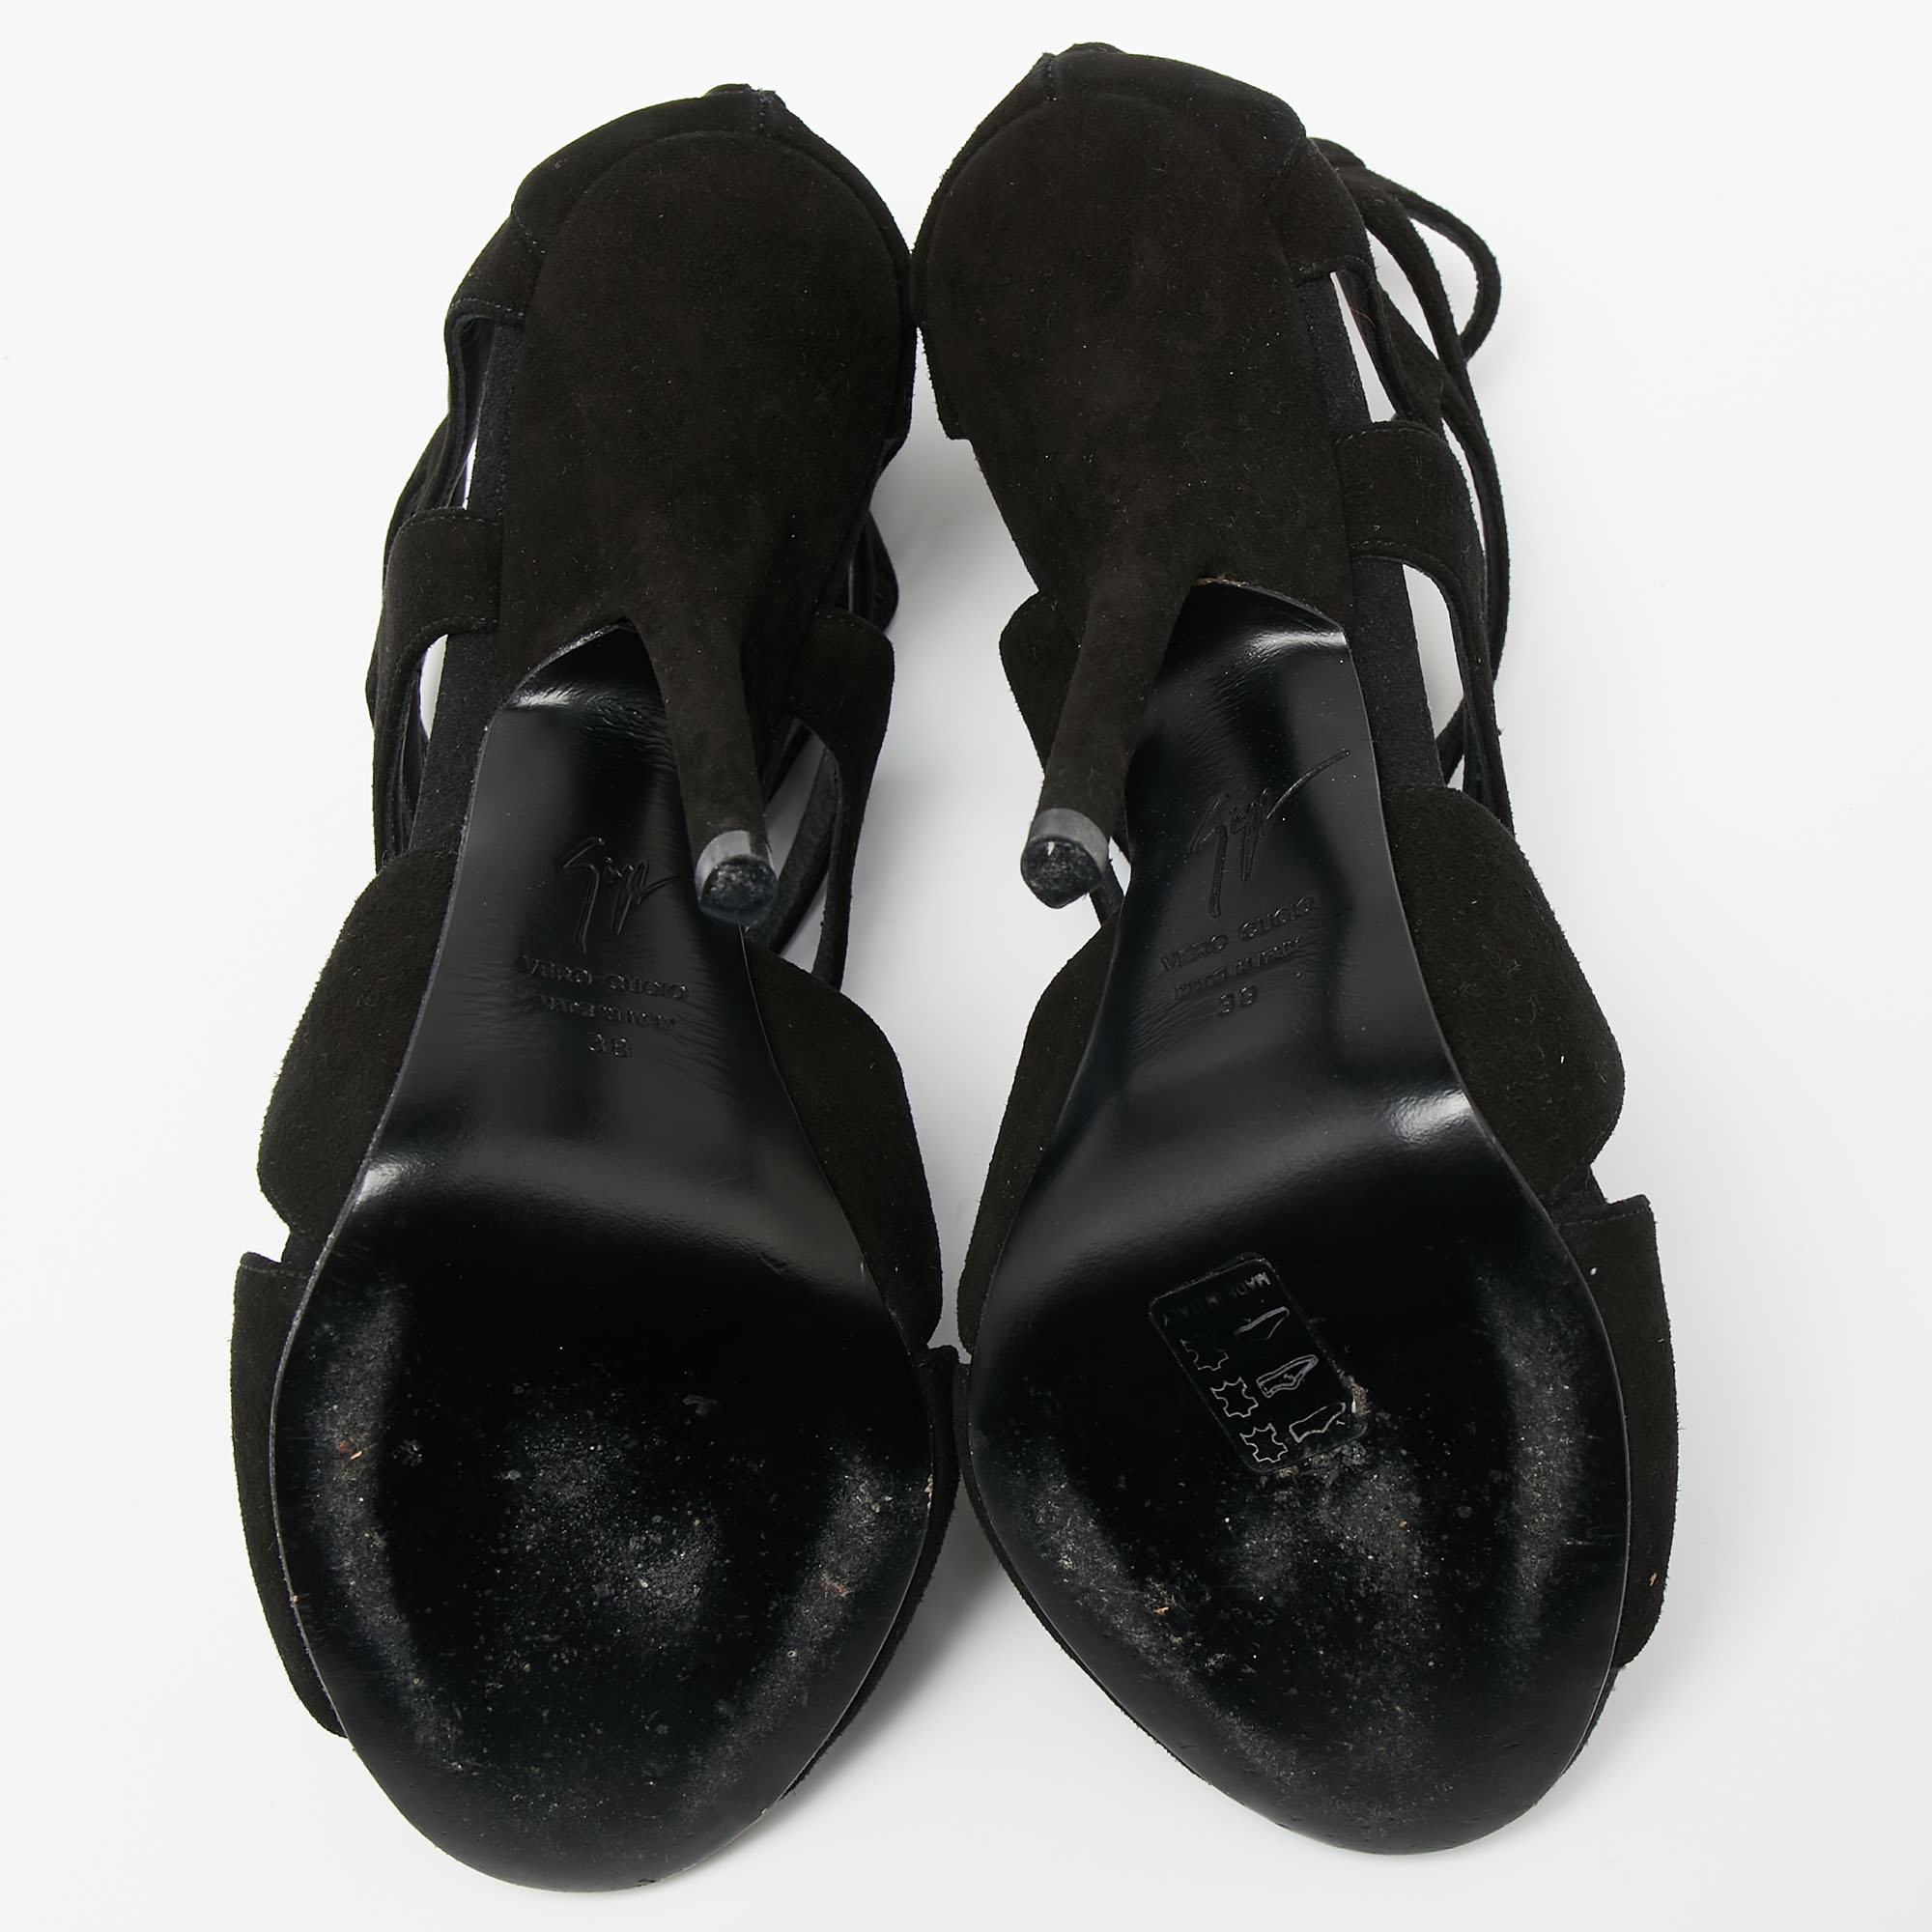 Giuseppe Zanotti Black Suede Butterfly Cutout Sandals Size 38